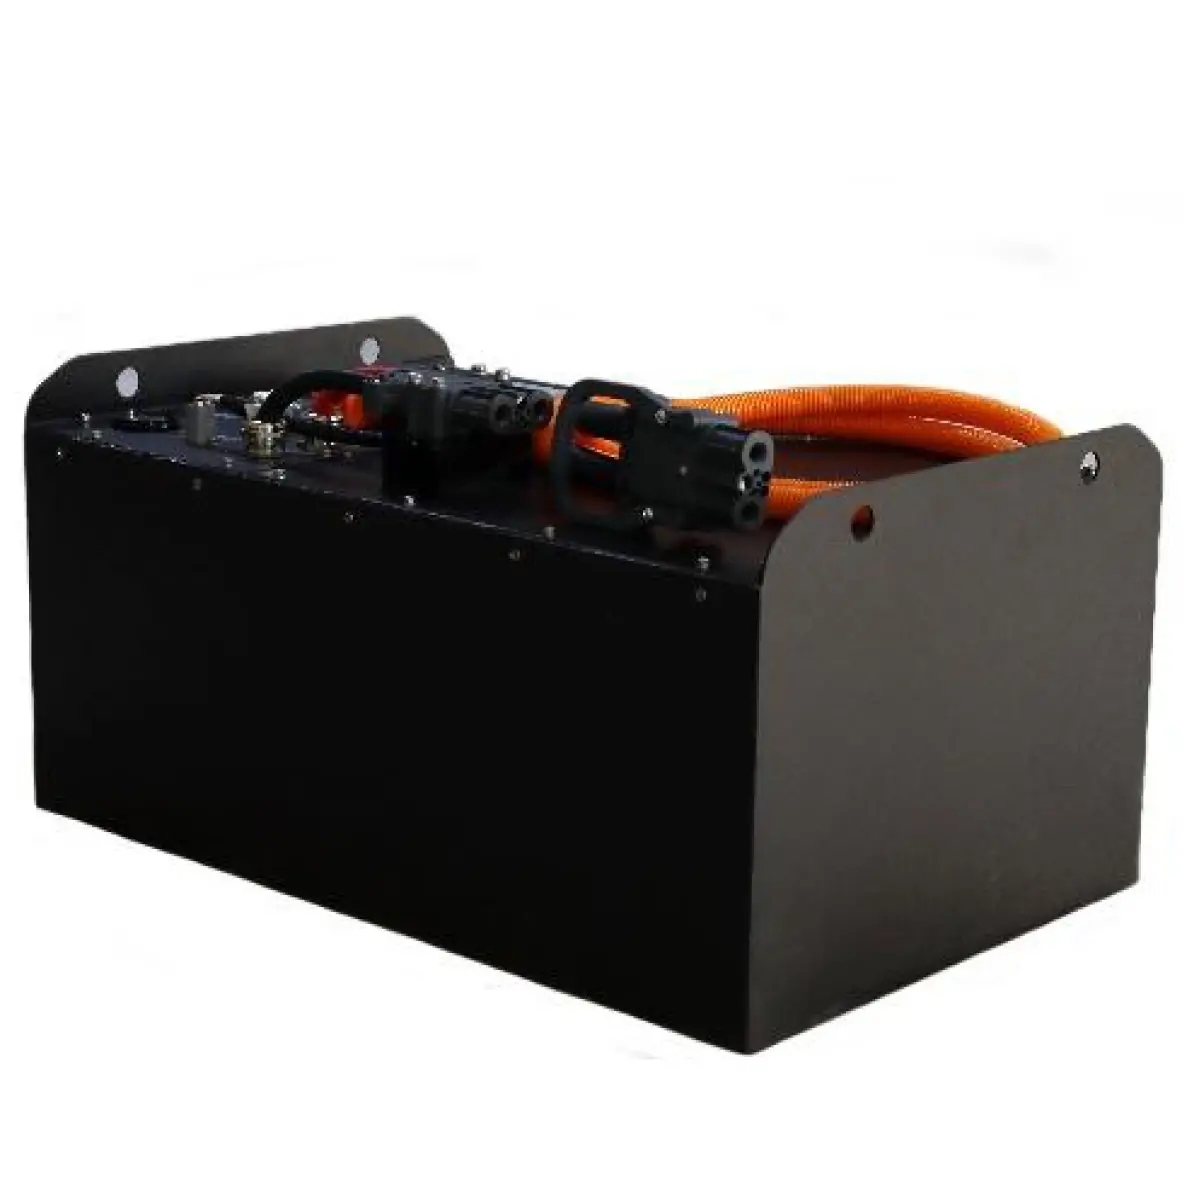 83.2V 404Ah lithium battrery Industrial Forklift Battery Pack